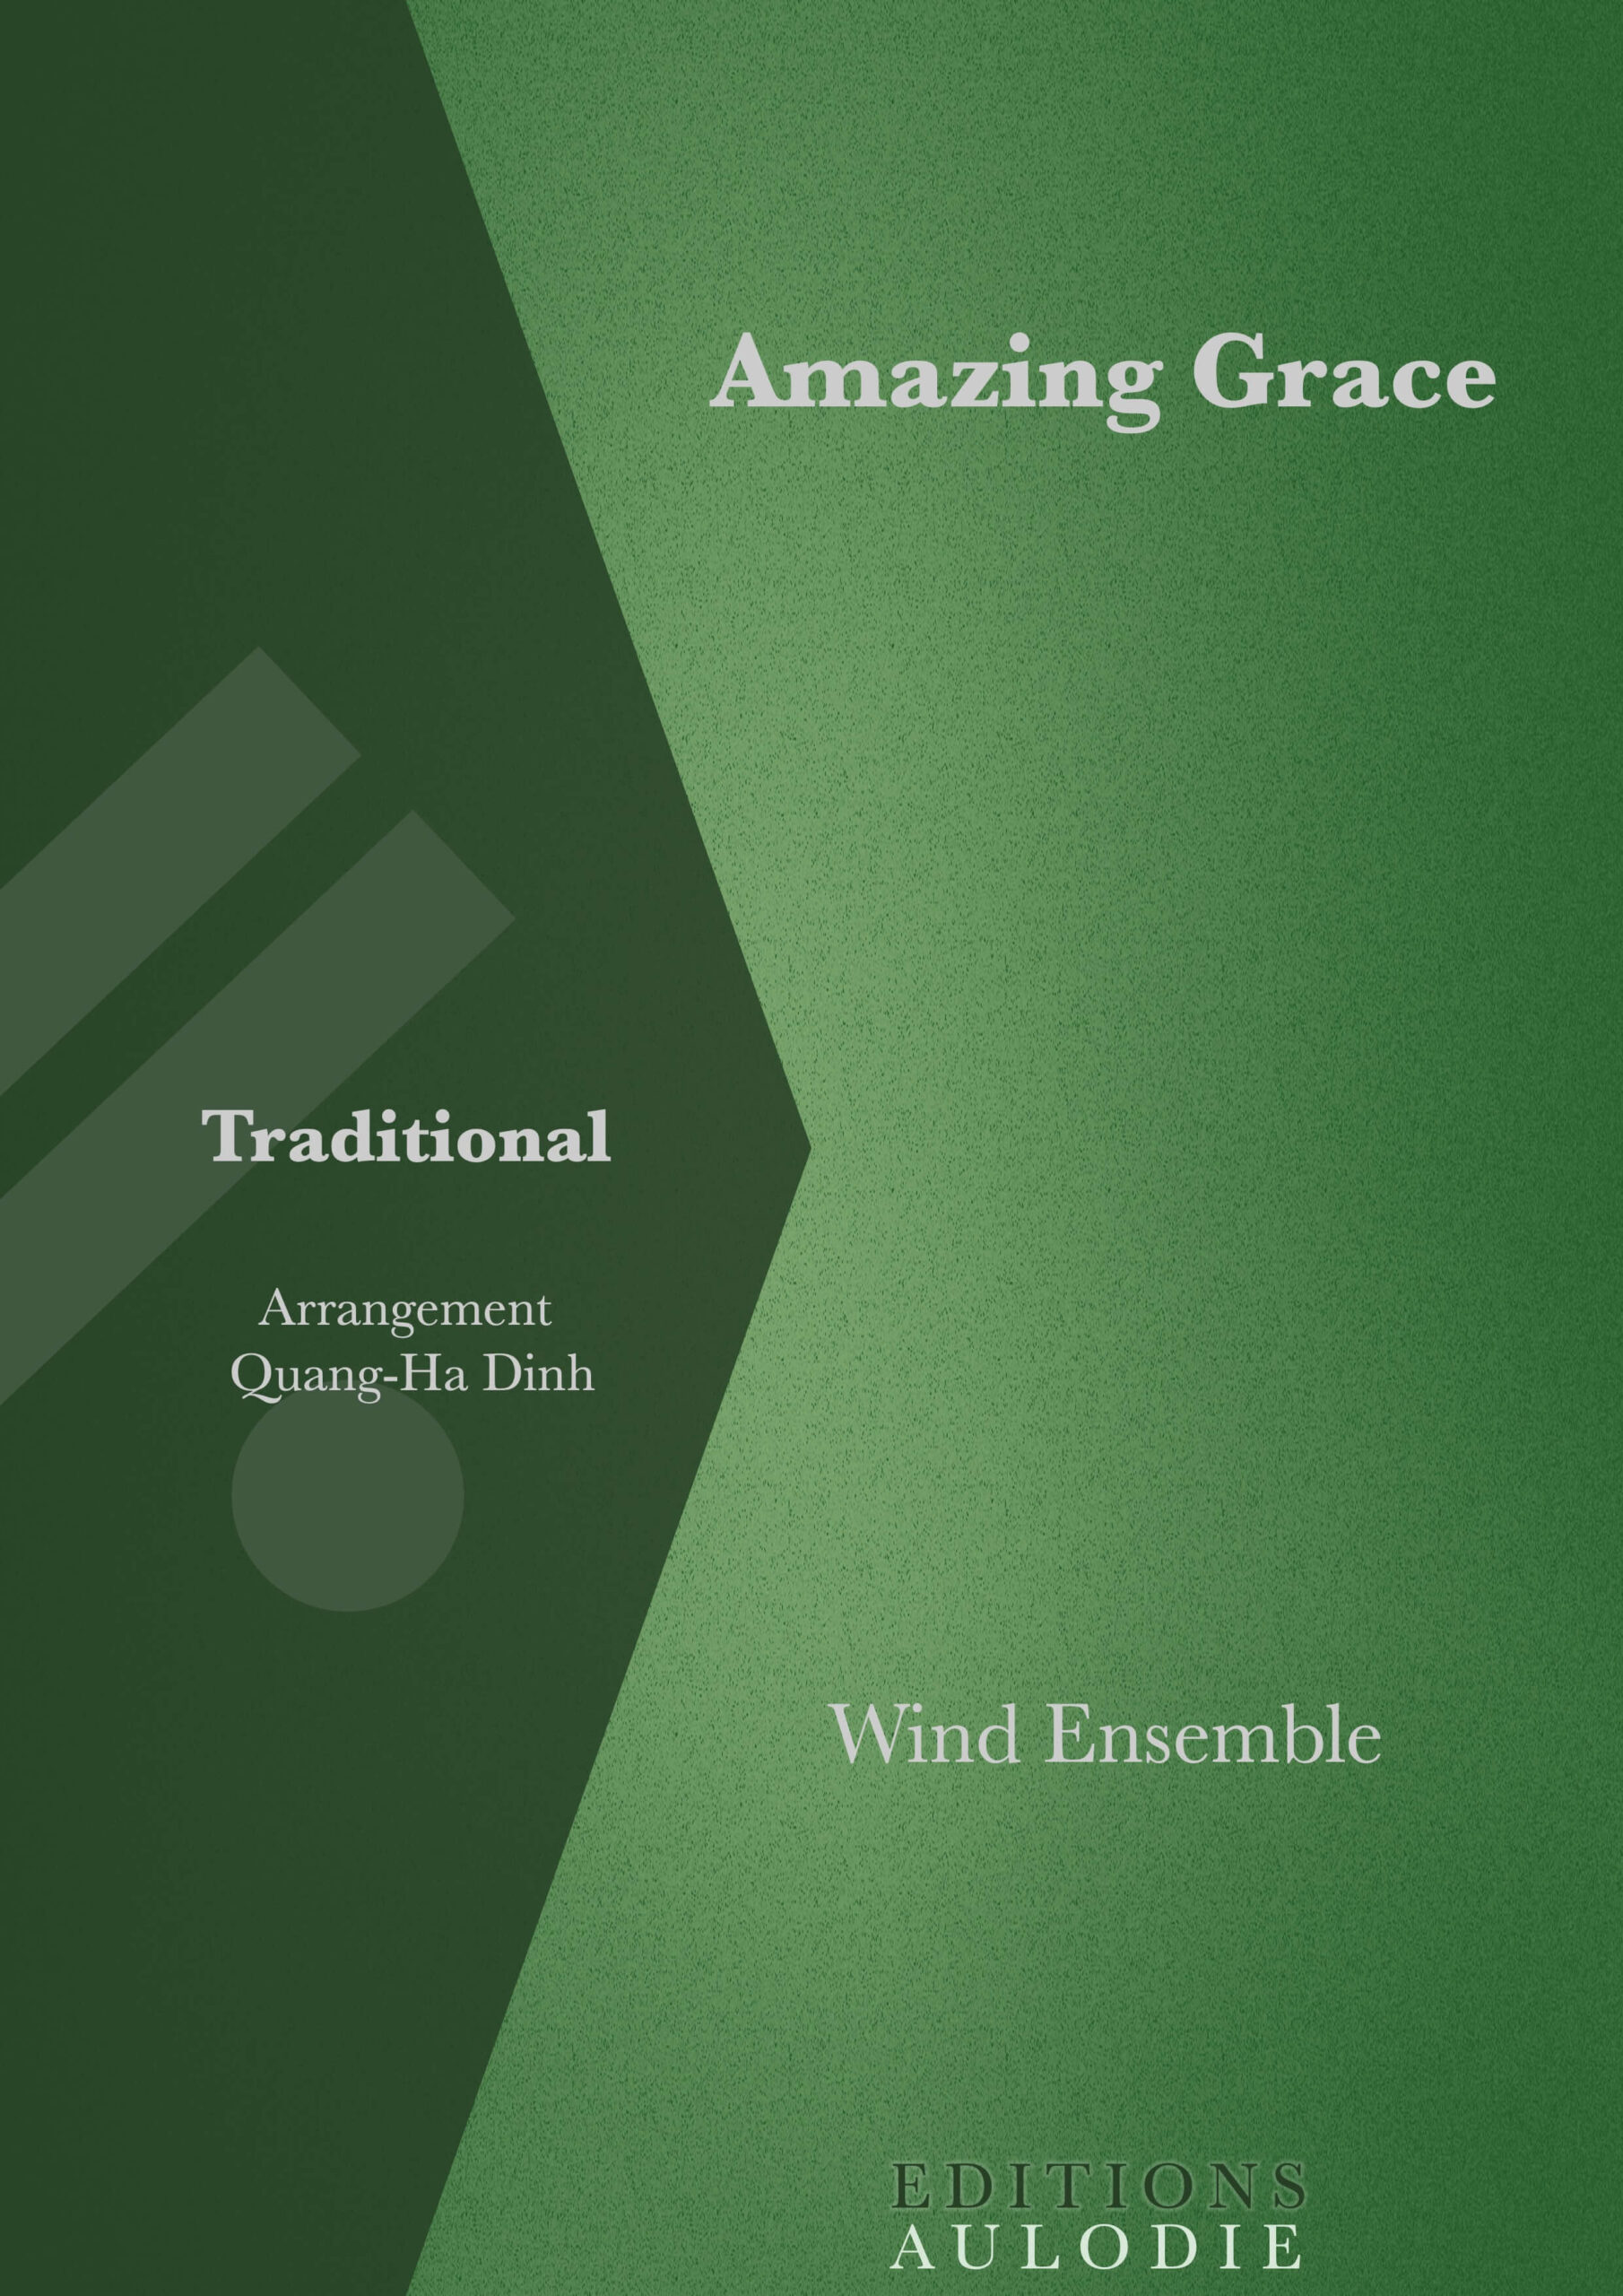 EA01075-Amazing_Grace-Traditional_folk_music-Wind_Ensemble